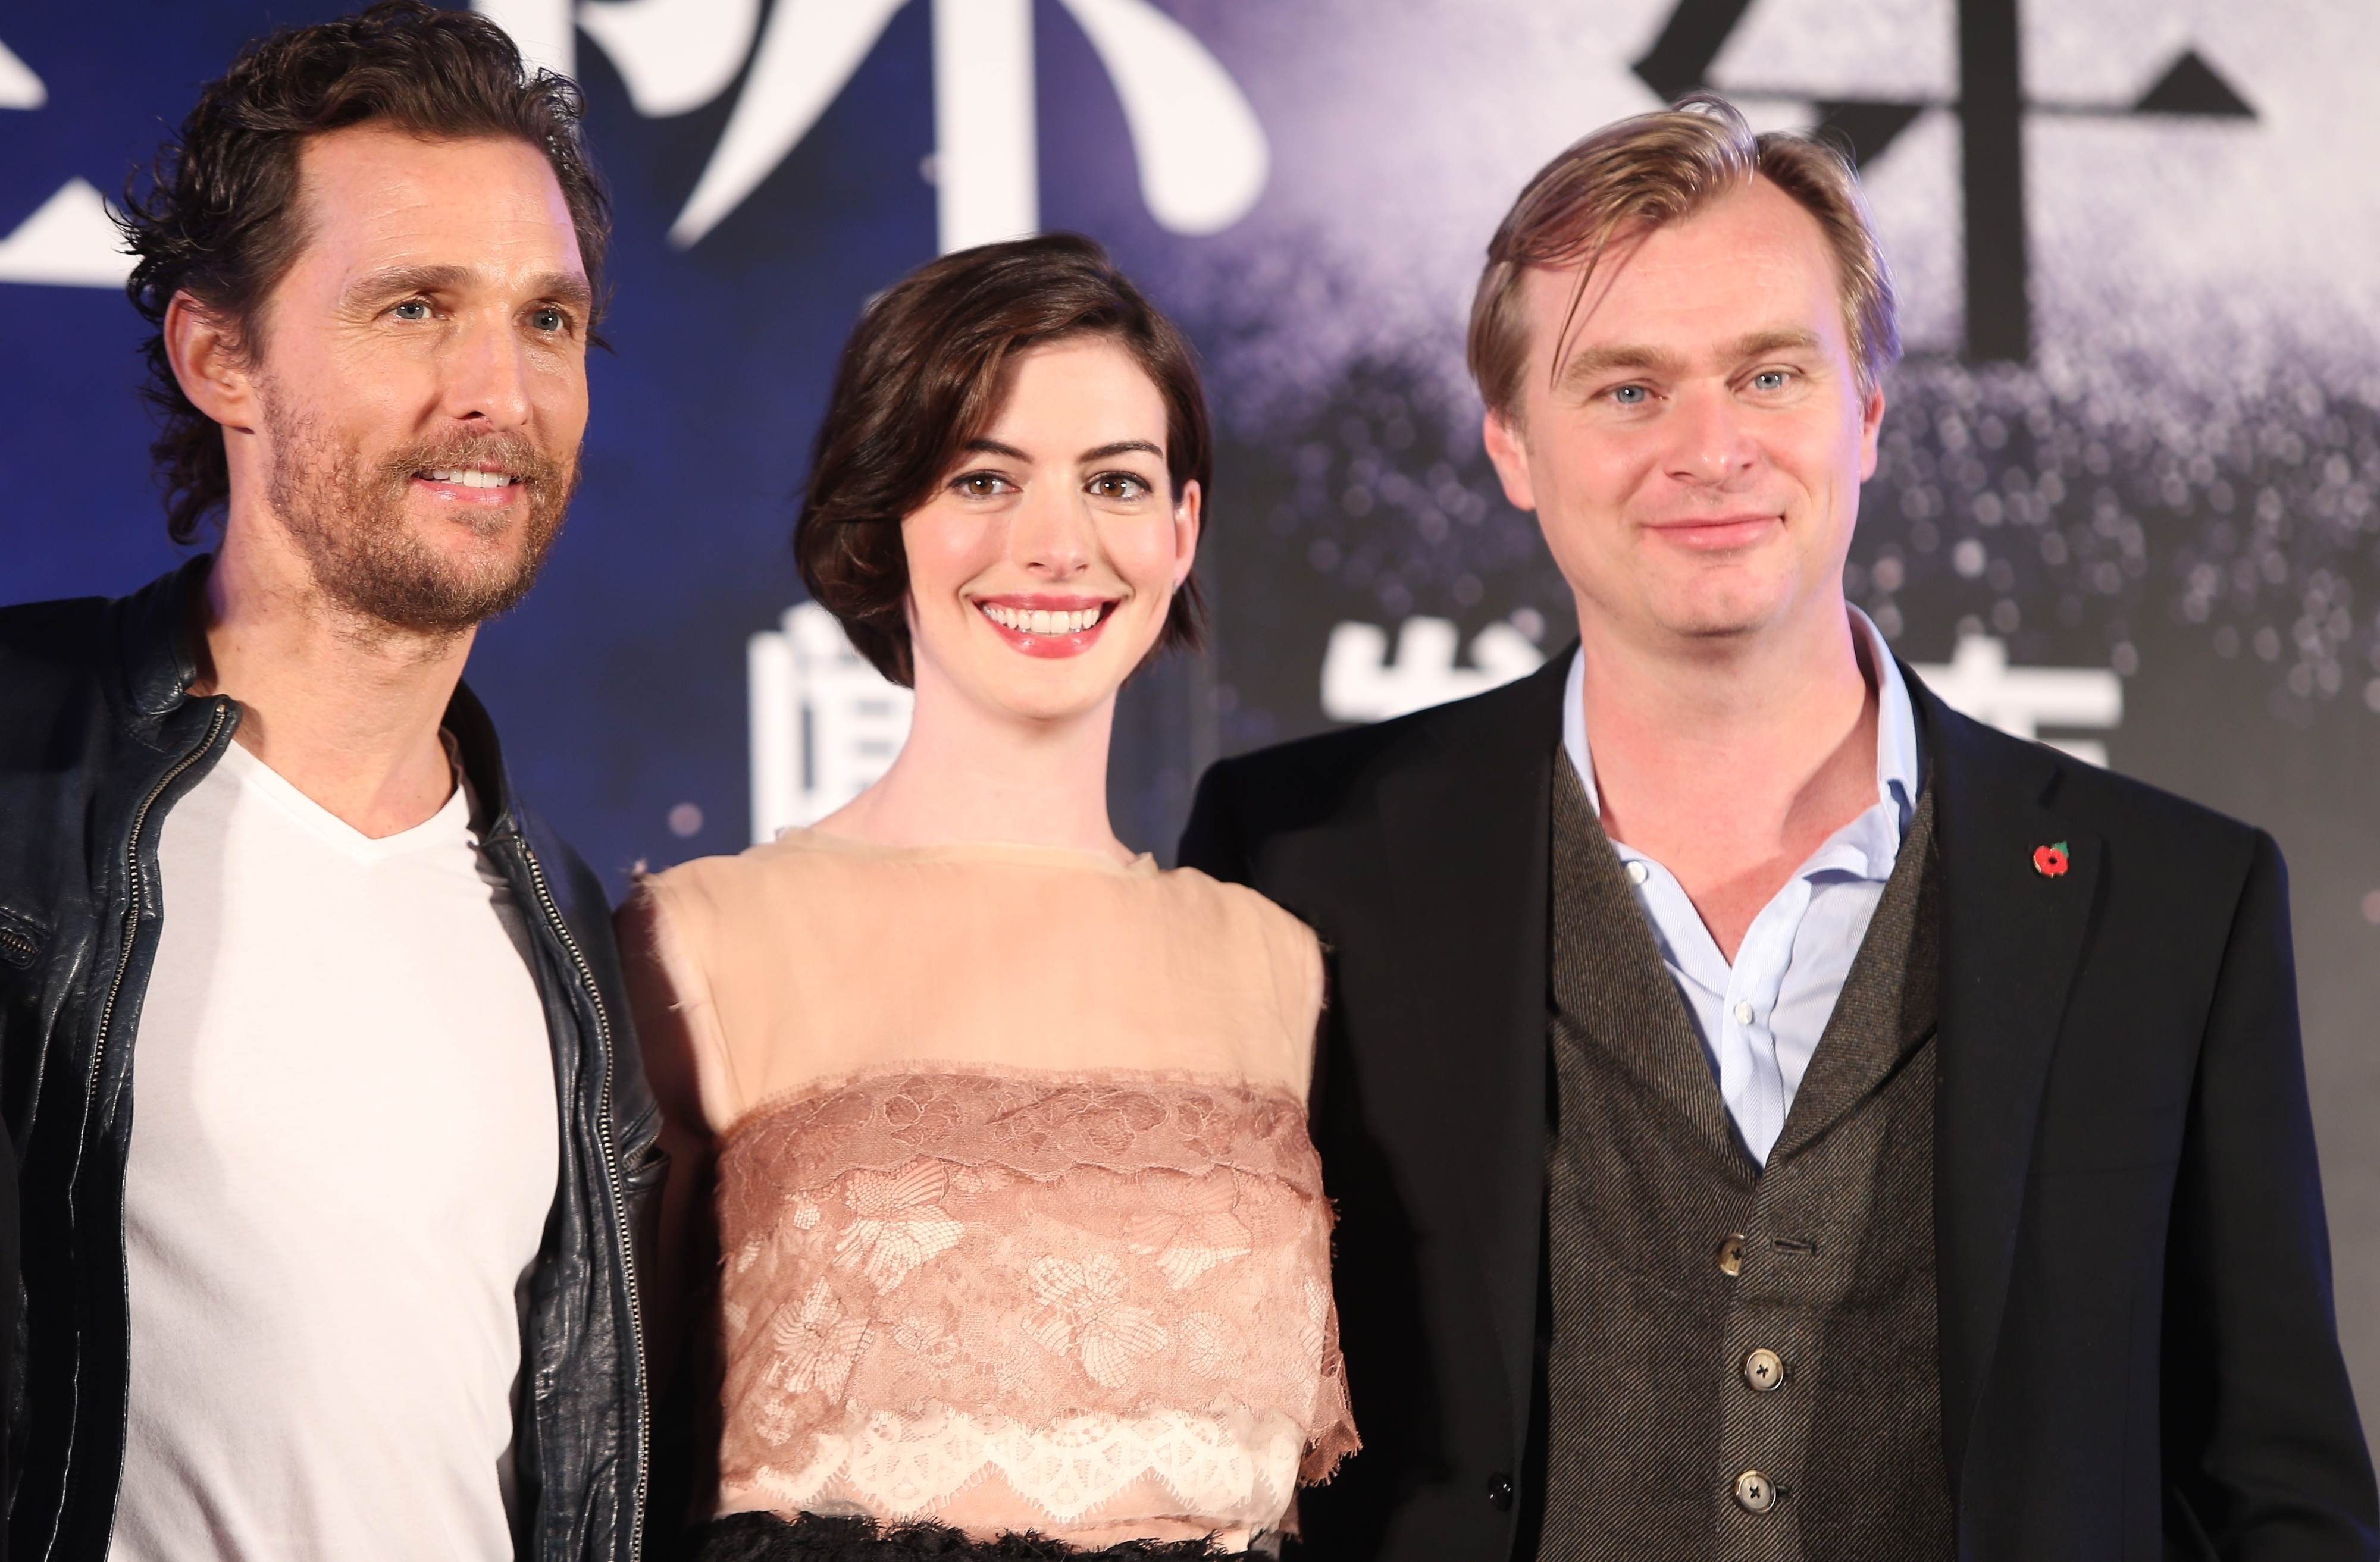 Christopher with Interstellar costars Matthew McConaughey and Anne Hathaway